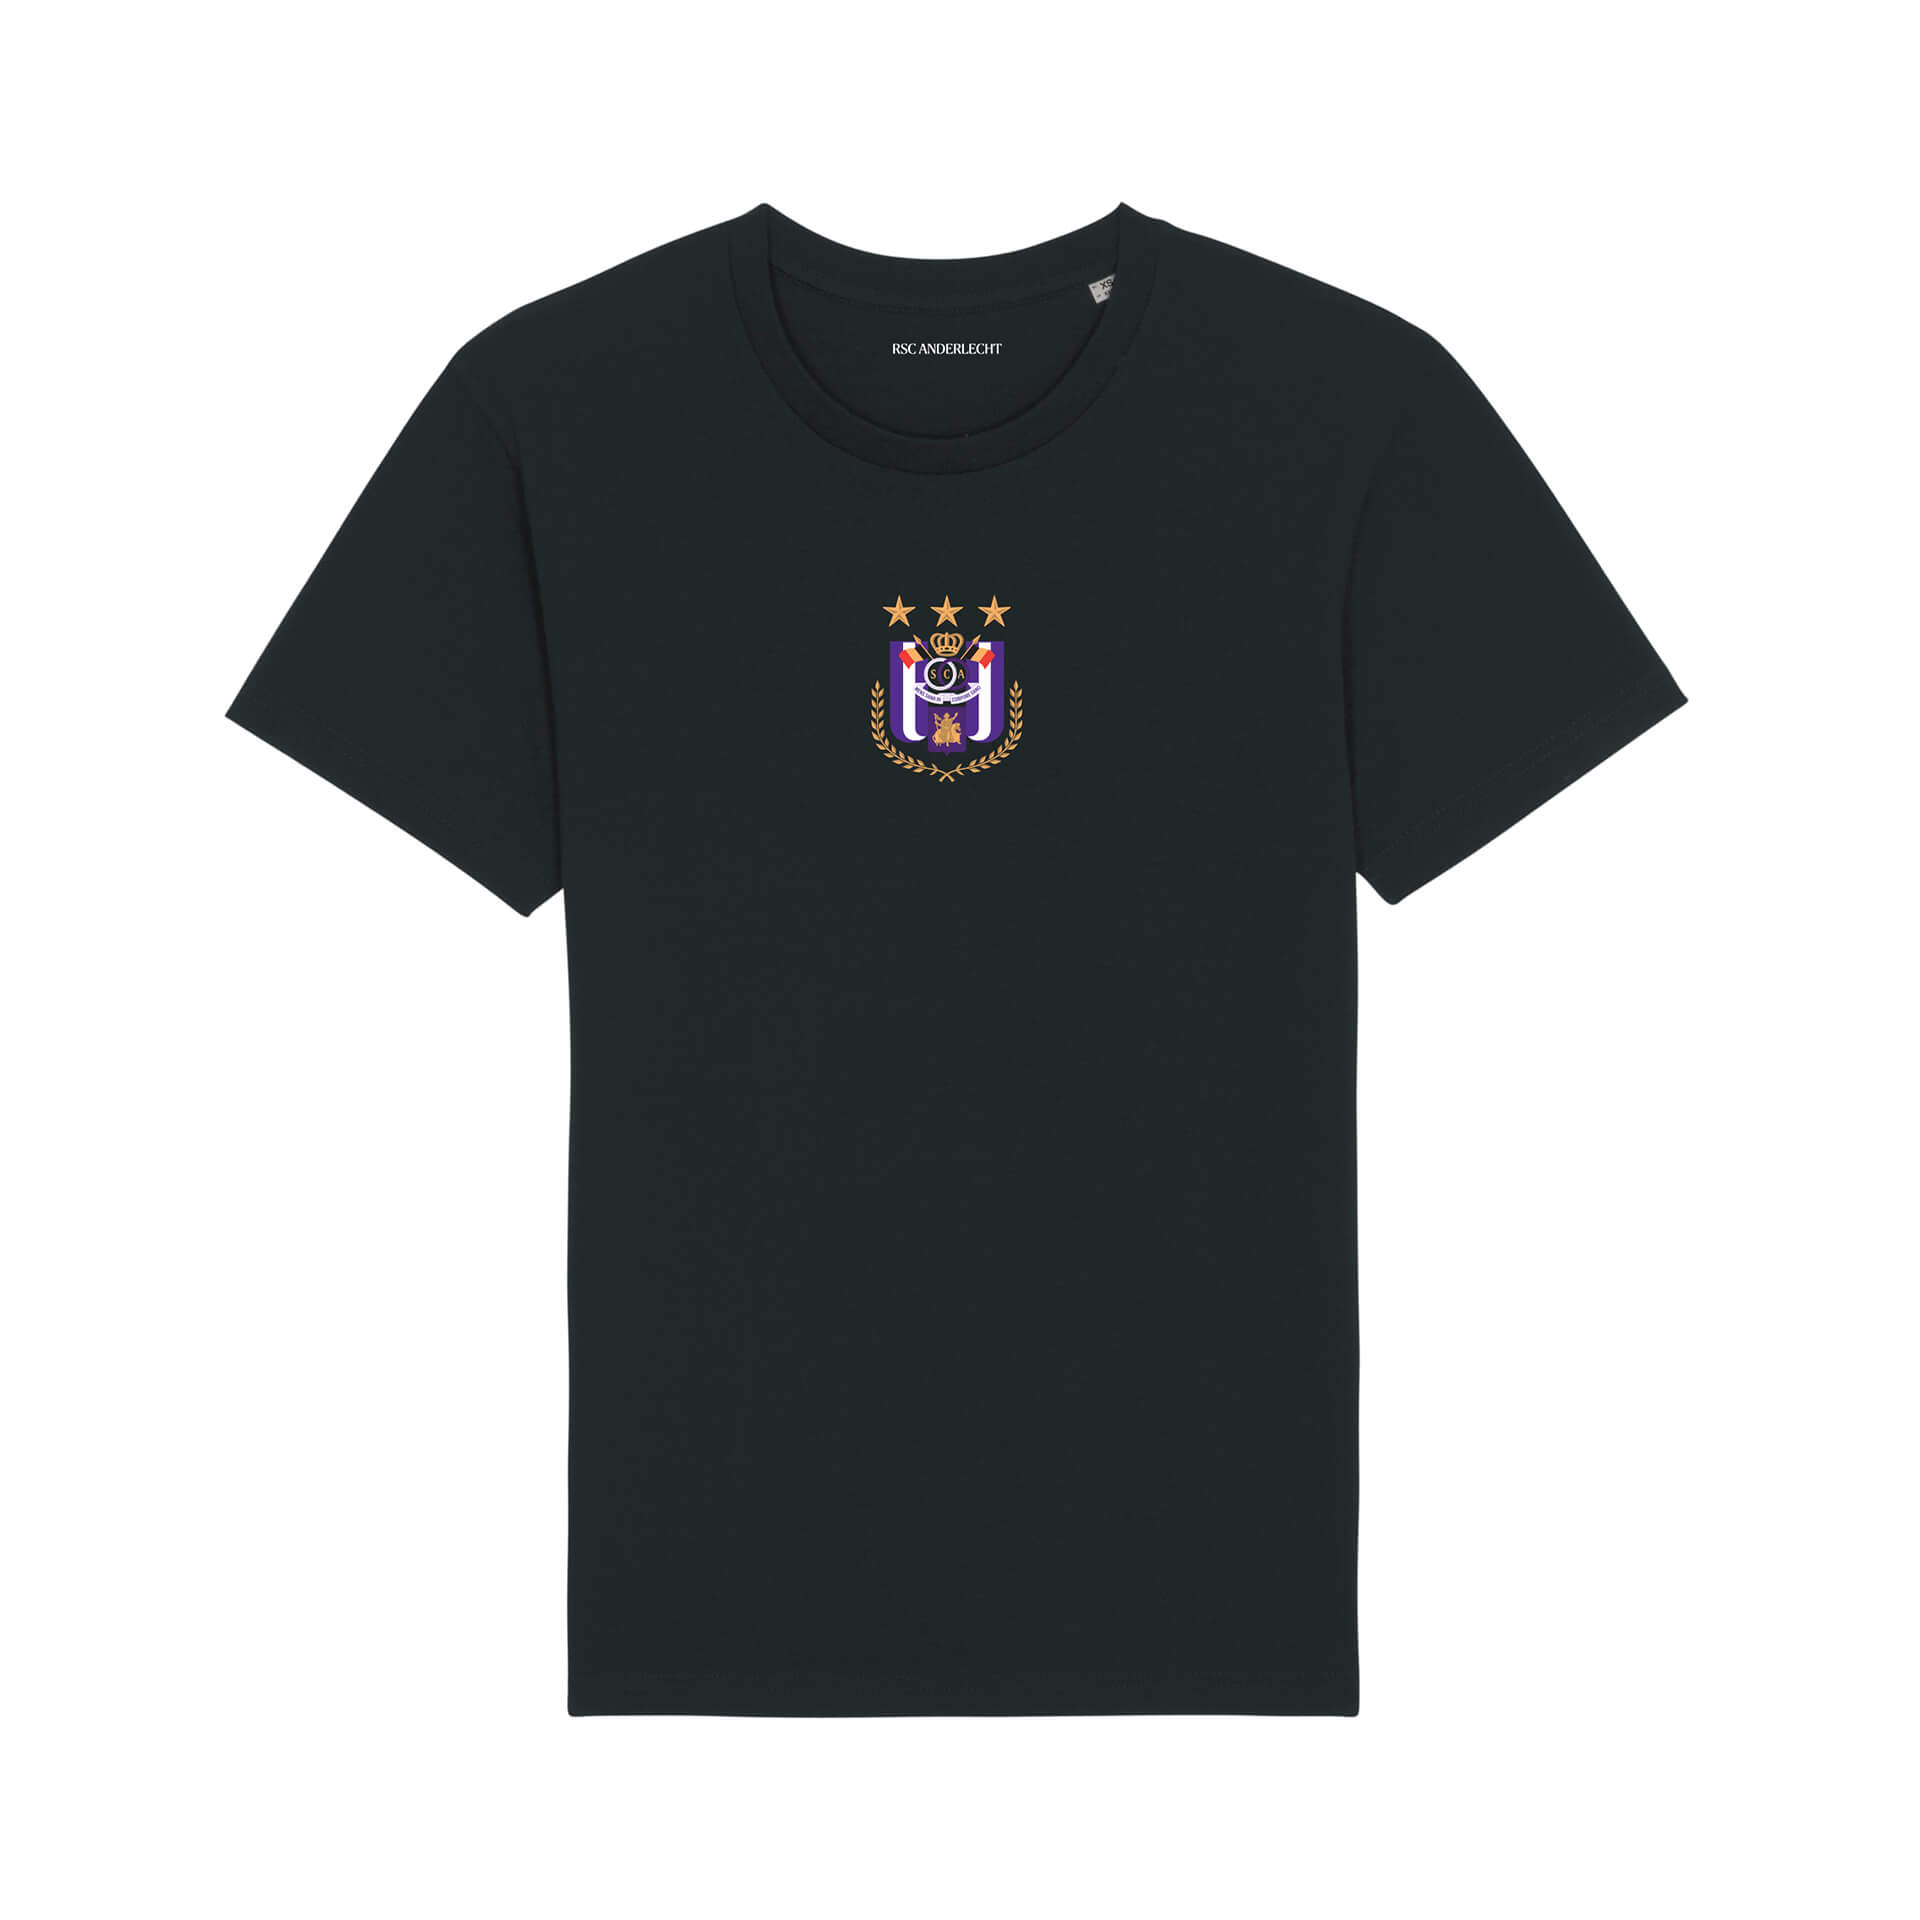 T-shirt black classic logo